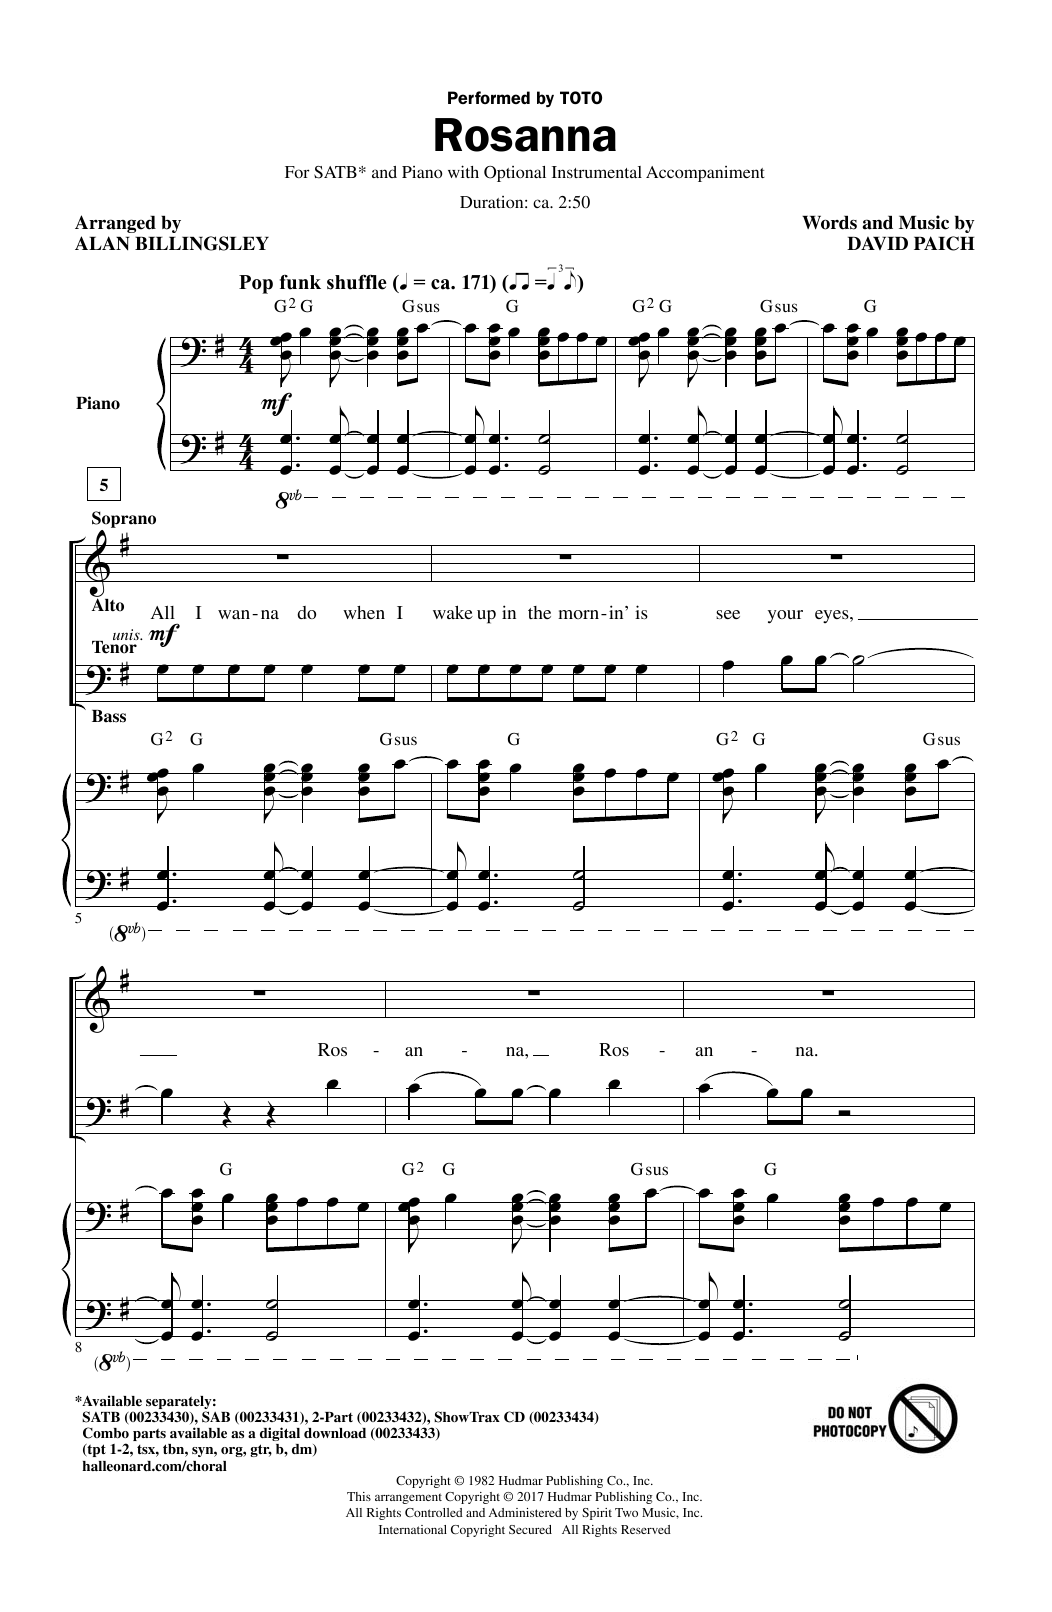 Toto Rosanna (arr. Alan Billingsley) Sheet Music Notes & Chords for SAB - Download or Print PDF